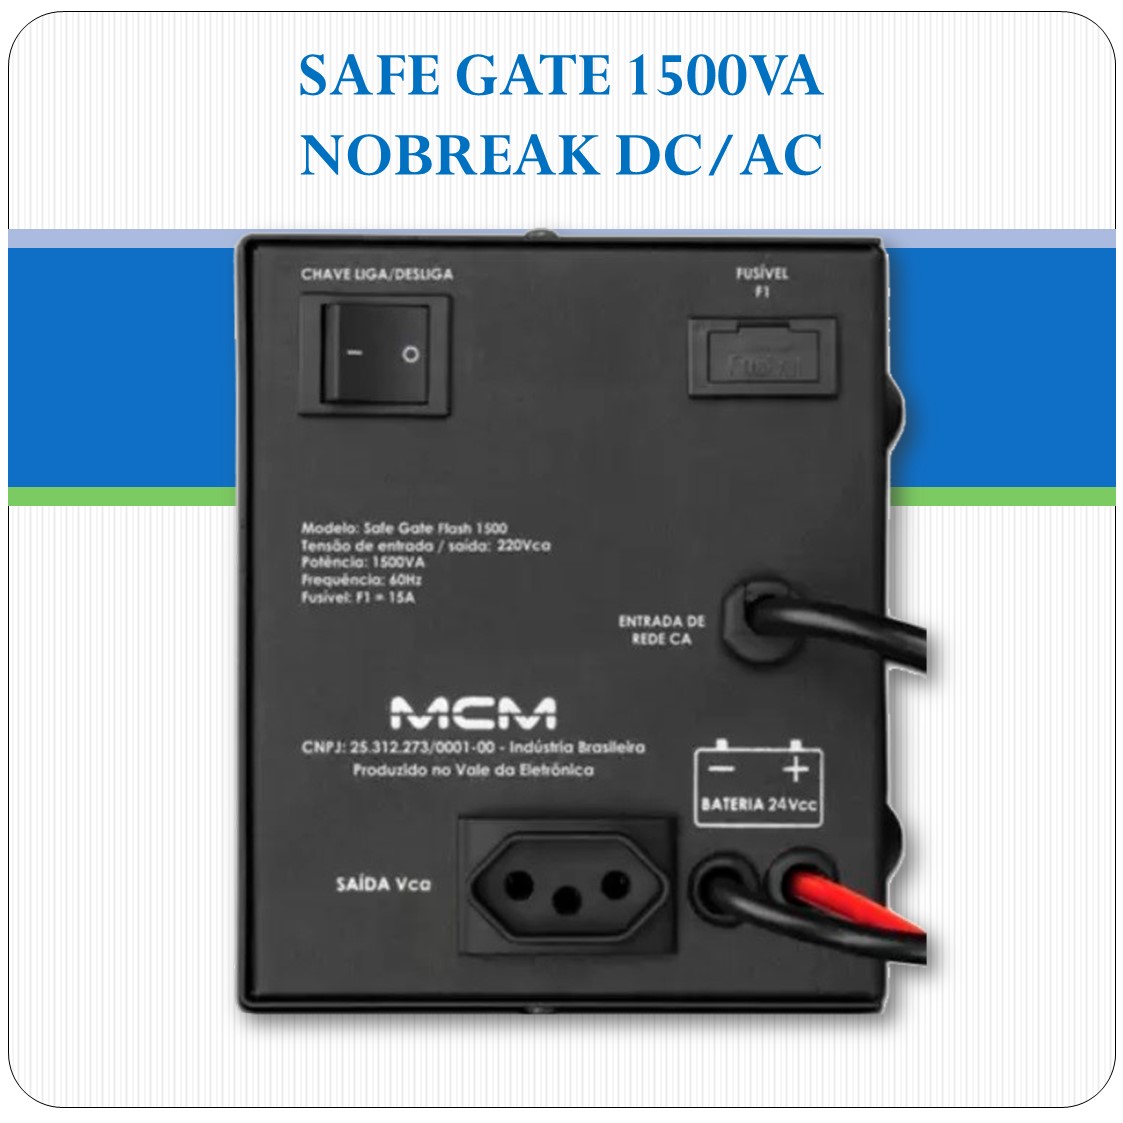 Fonte Nobreak - Safe Gate 1500VA MCM - DC/AC